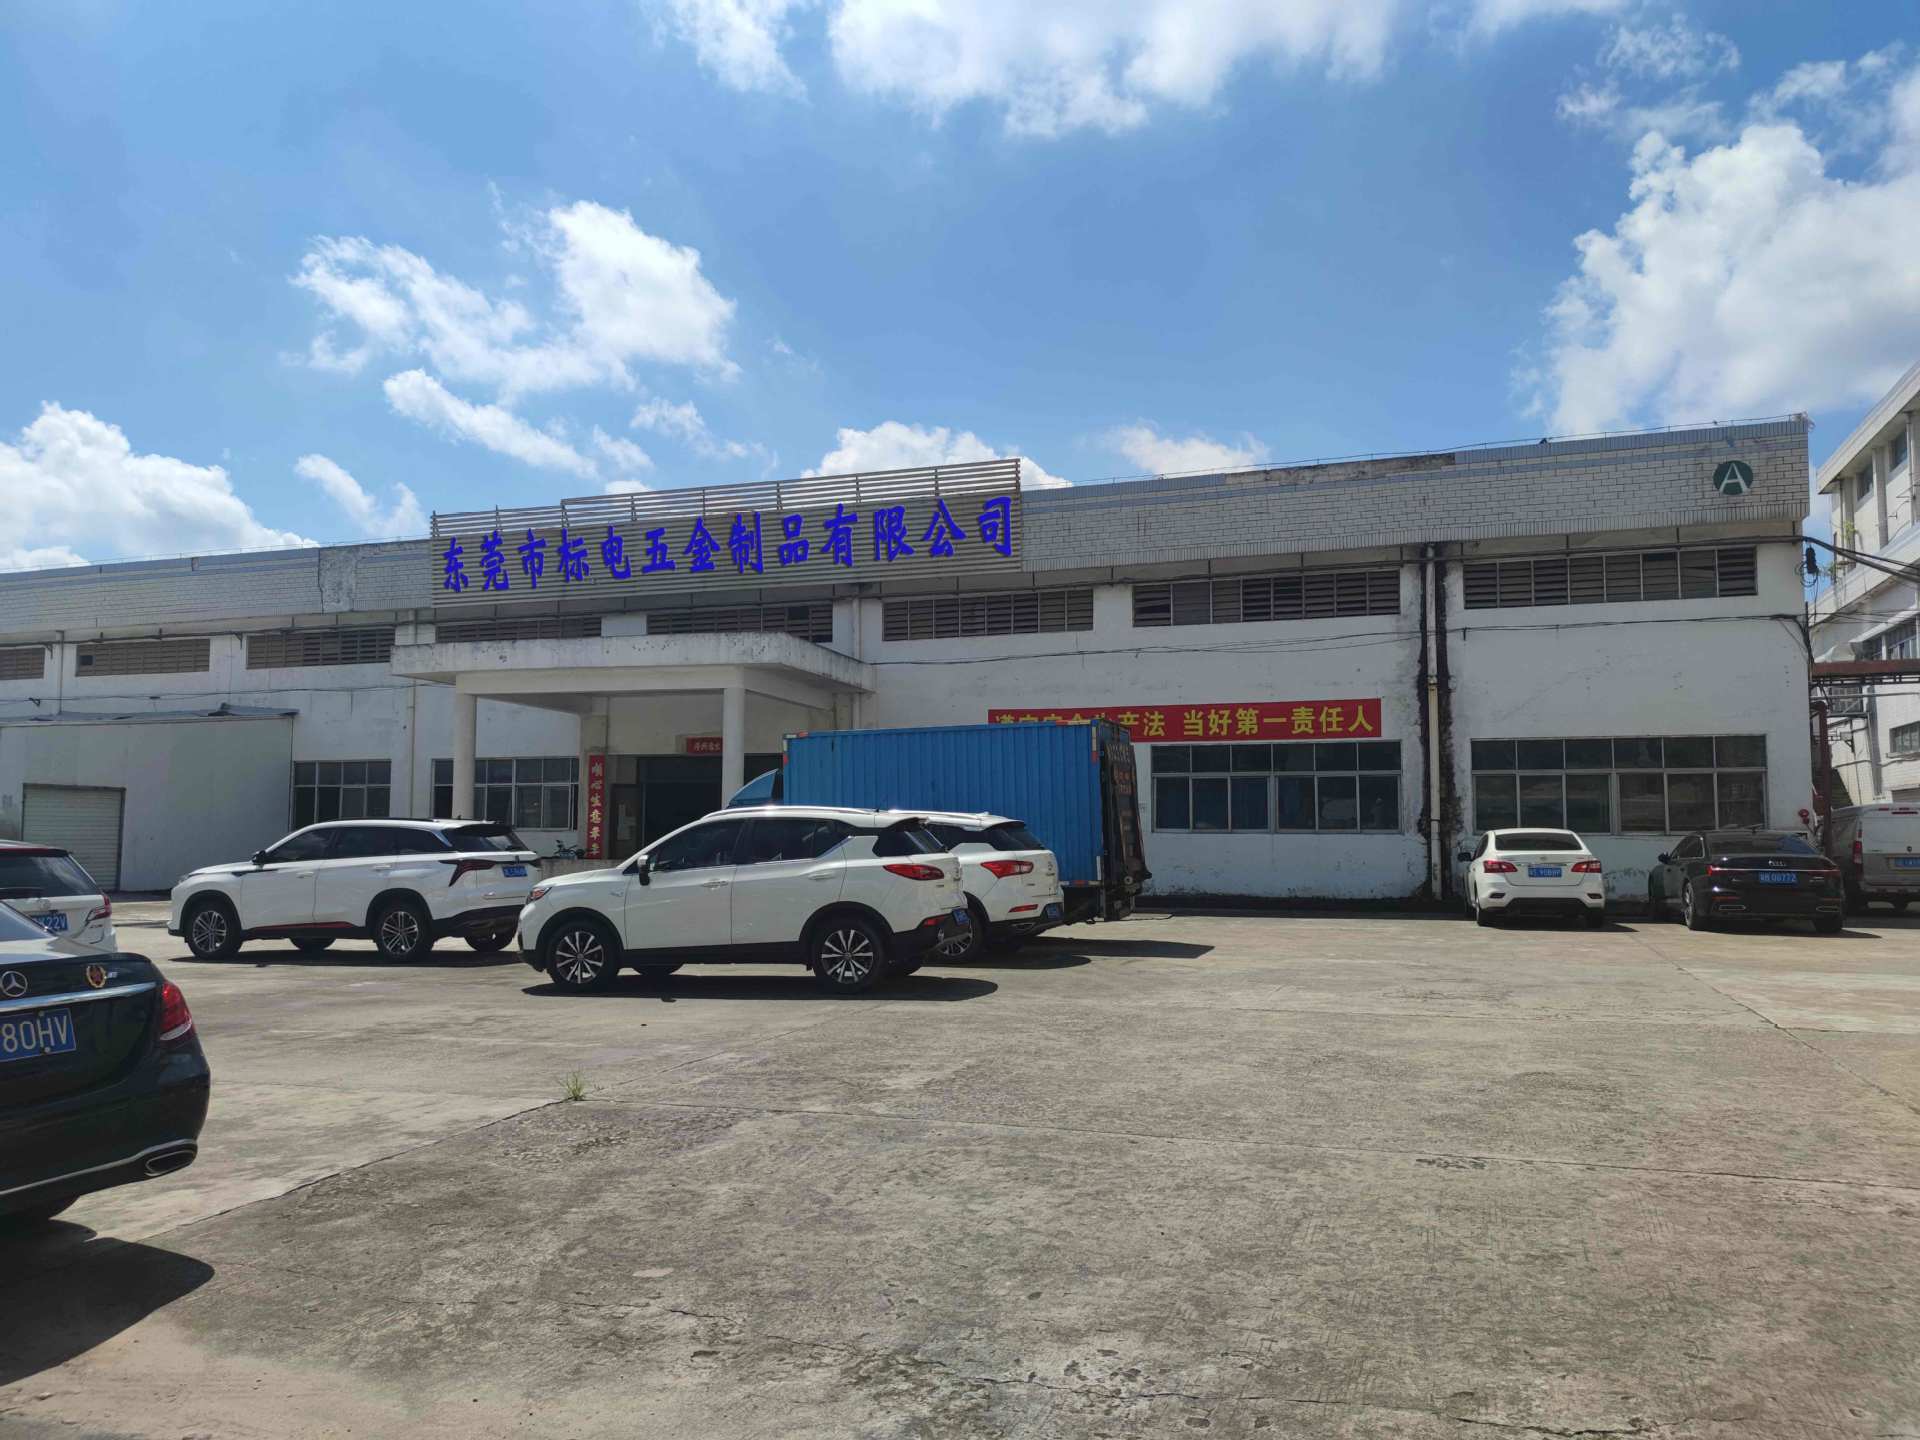   Dongguan Biaodian Hardware Products Co., LTD